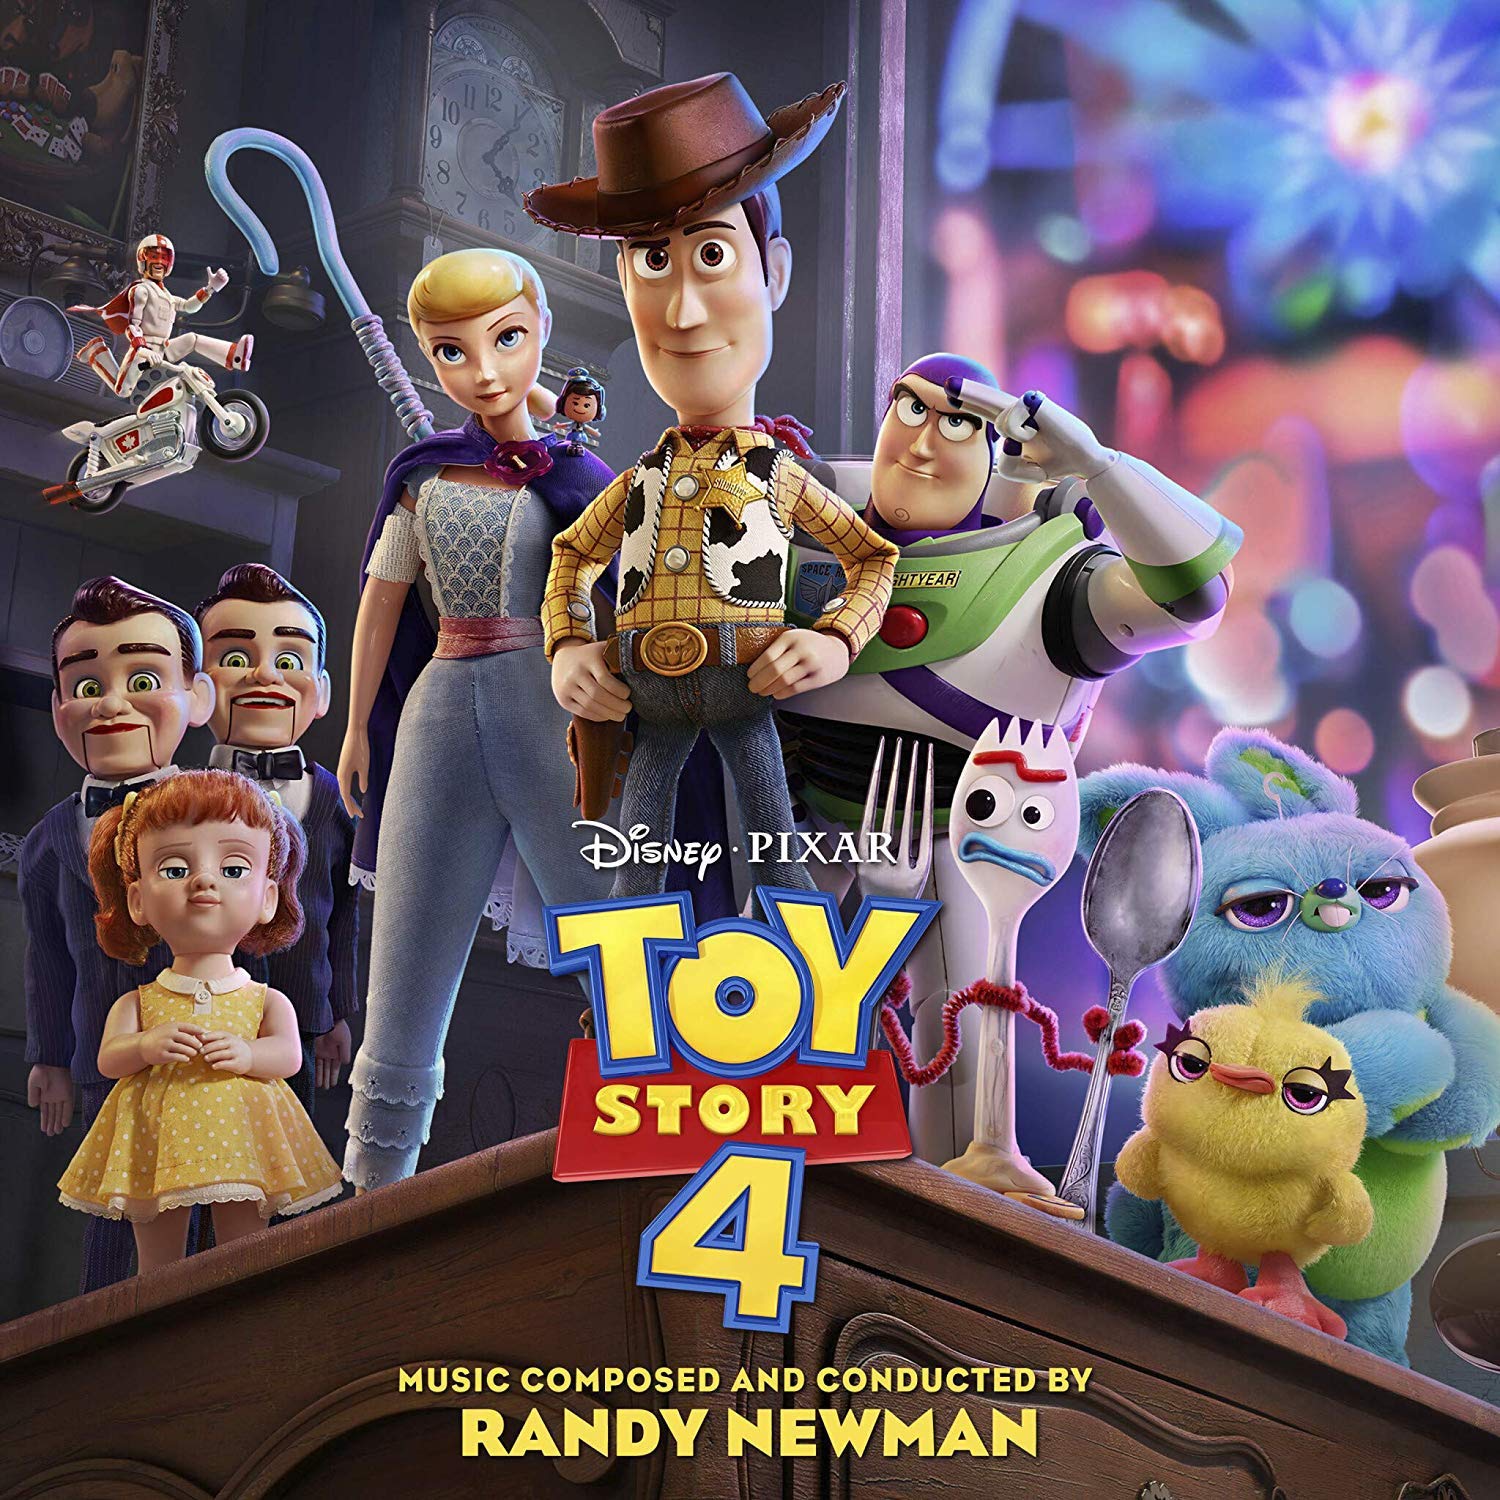 Aprender Brincando Disney - Pixar - Toy Story 4